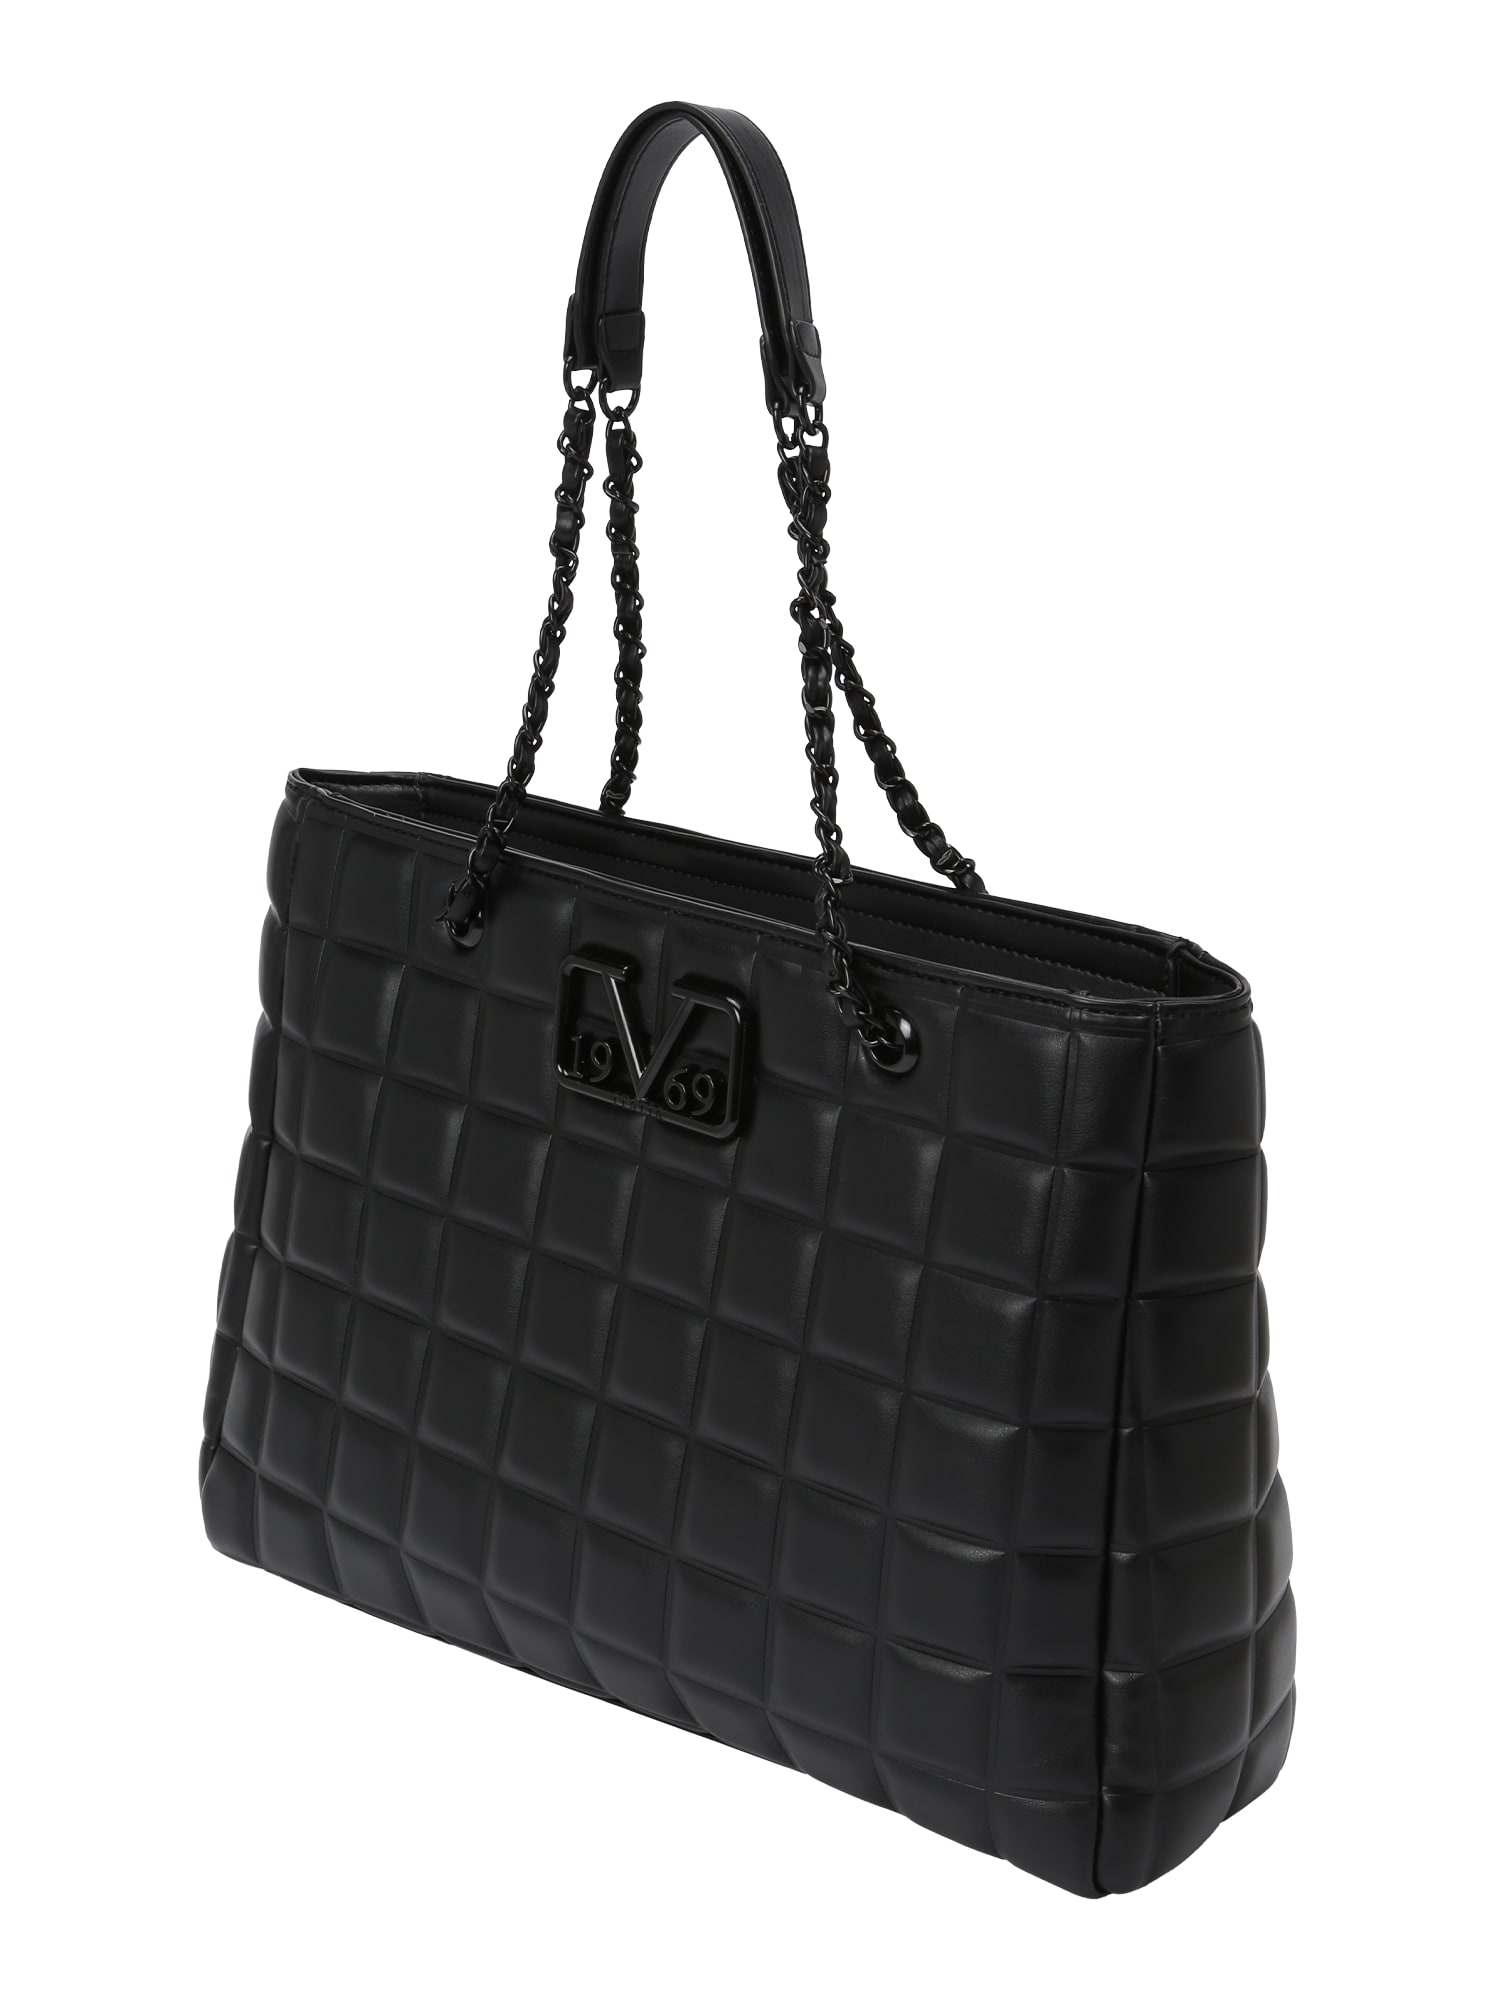 19V69 ITALIA Pirkinių krepšys 'by Versace RAICA' juoda